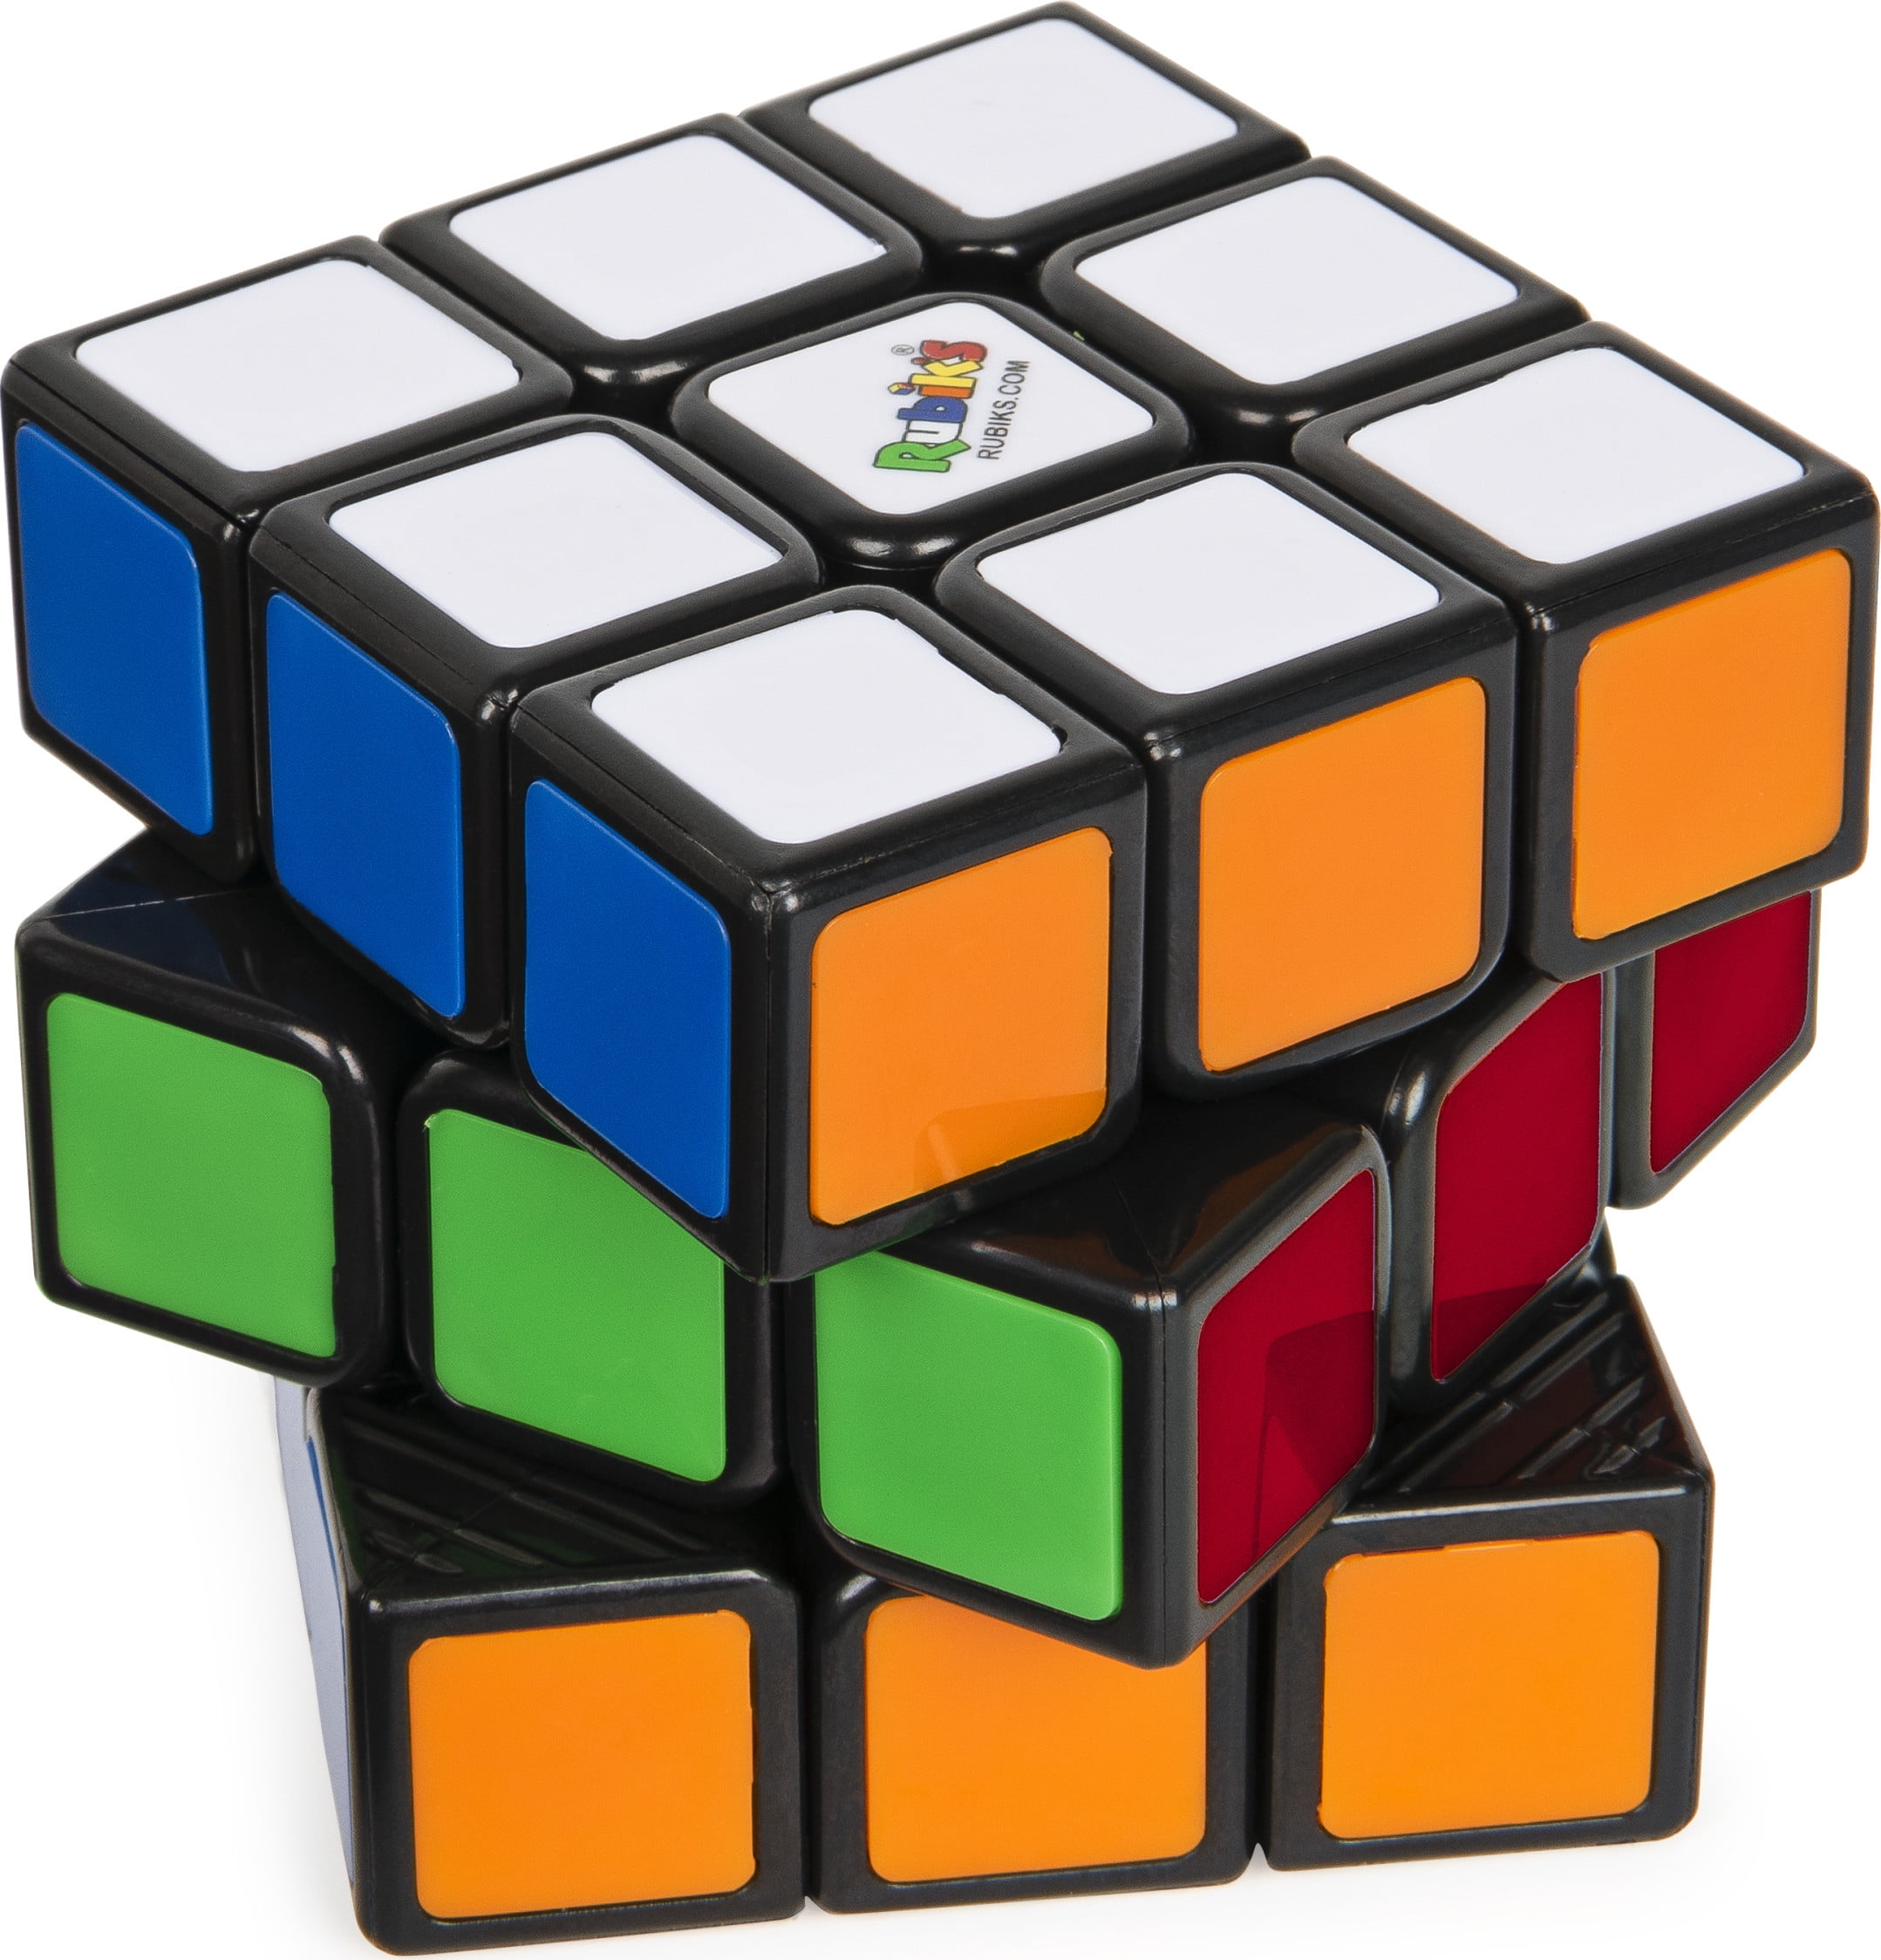 3*3*3 Rubiks Cube rubics rubix puzzle brain teaser GENUINE OFFICIAL world record 